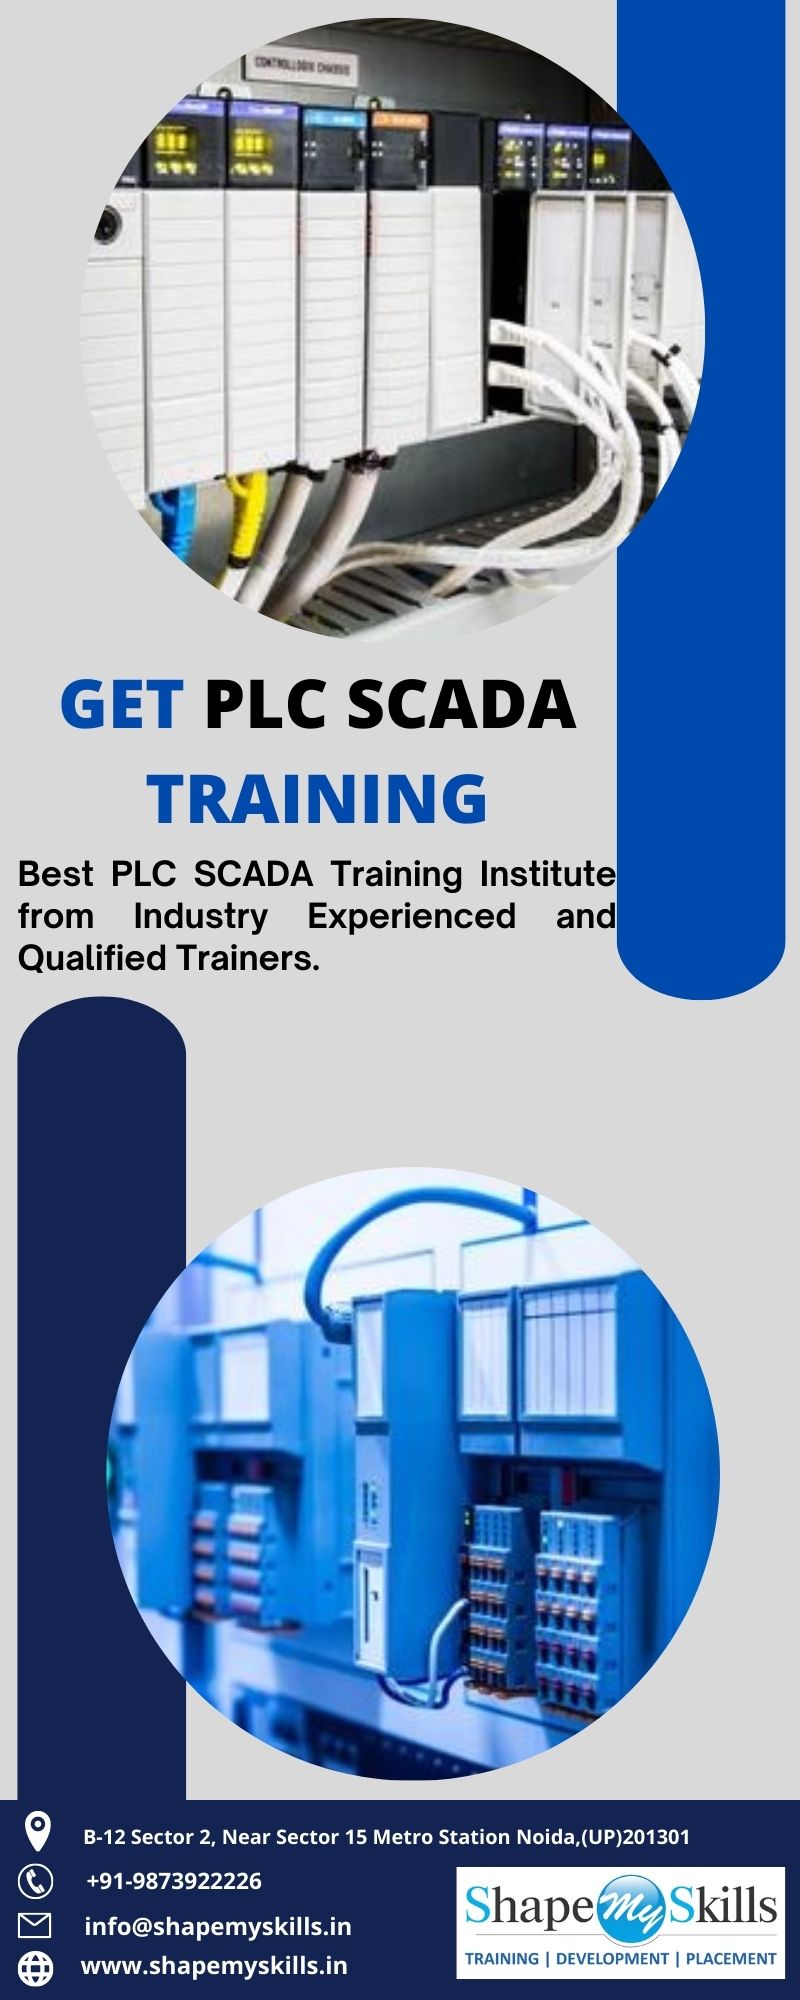 Get PLC SCADA TRAINING